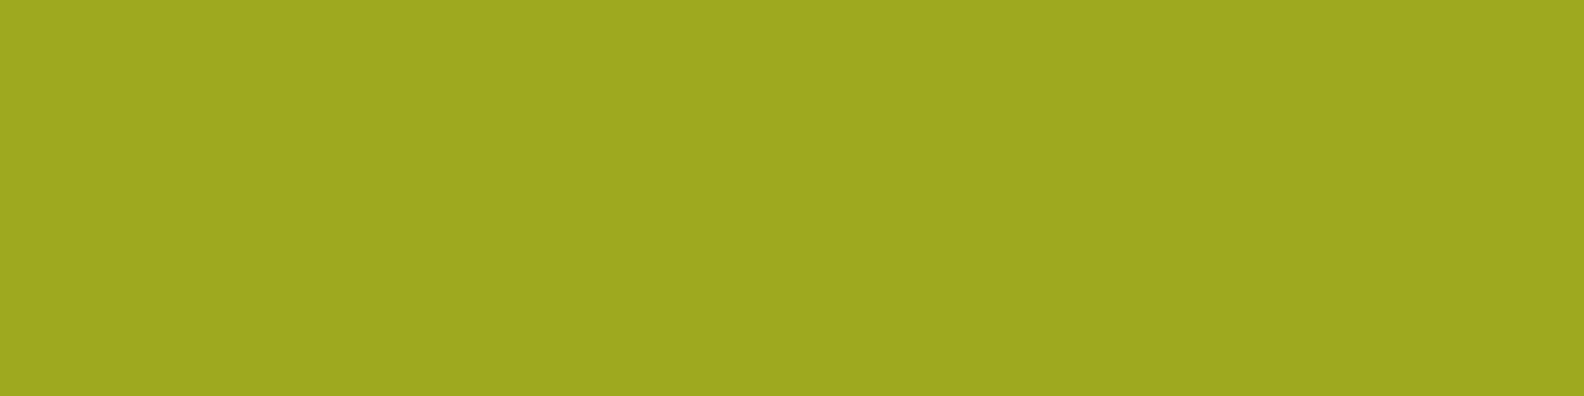 1584x396 Citron Solid Color Background